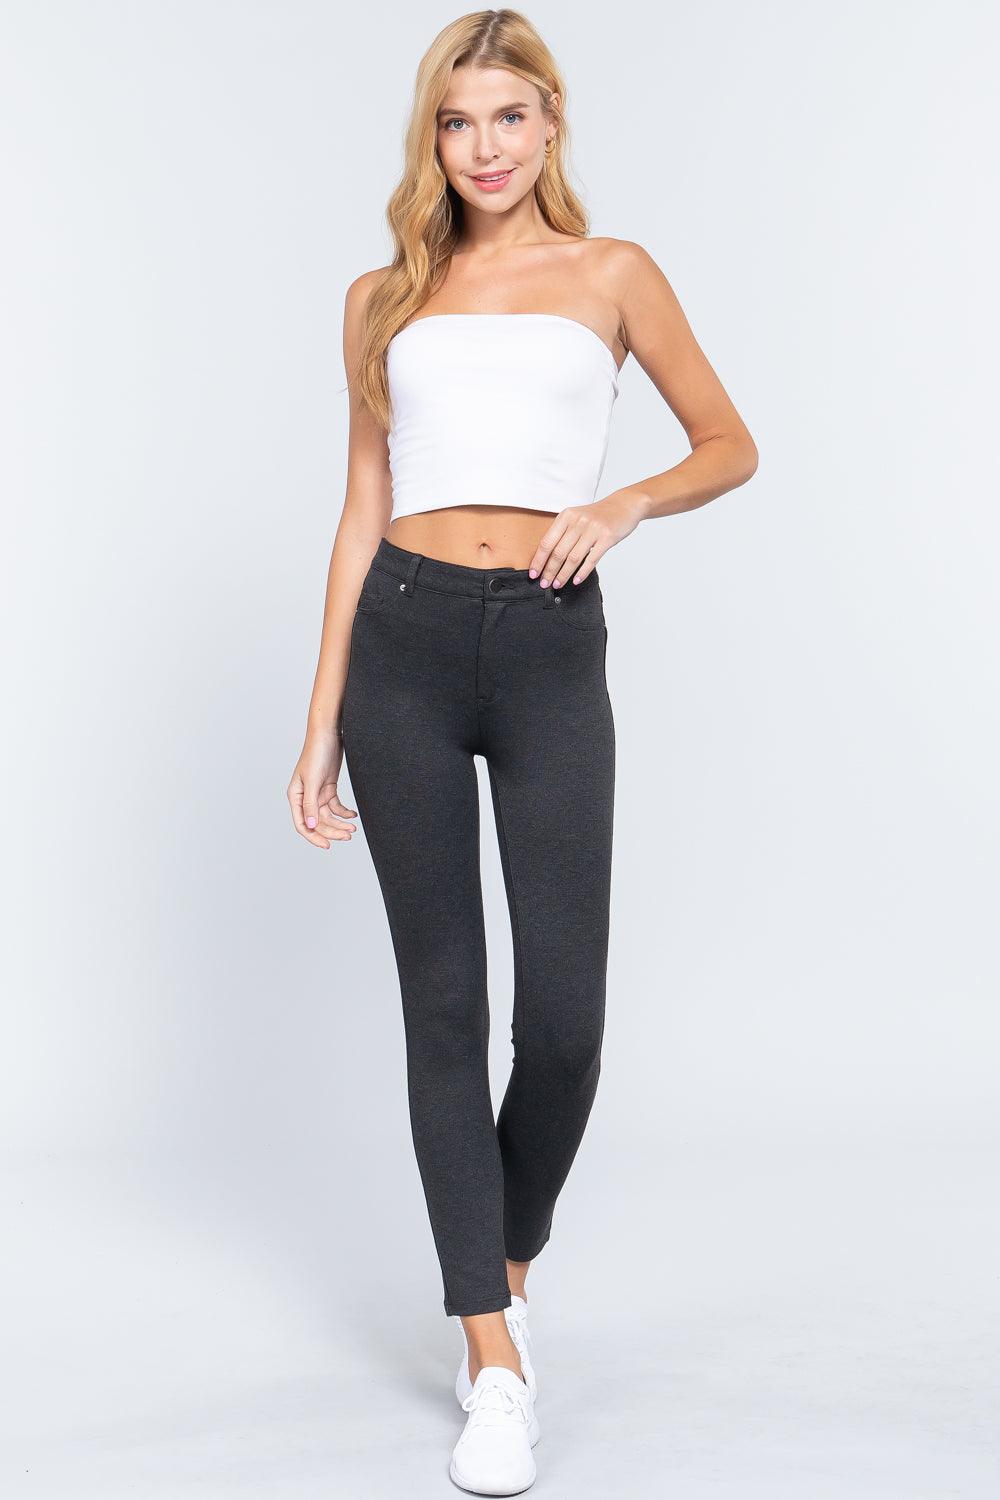 5-pockets Shape Skinny Ponte Mid-rise Pants - Boutique Fashionistah